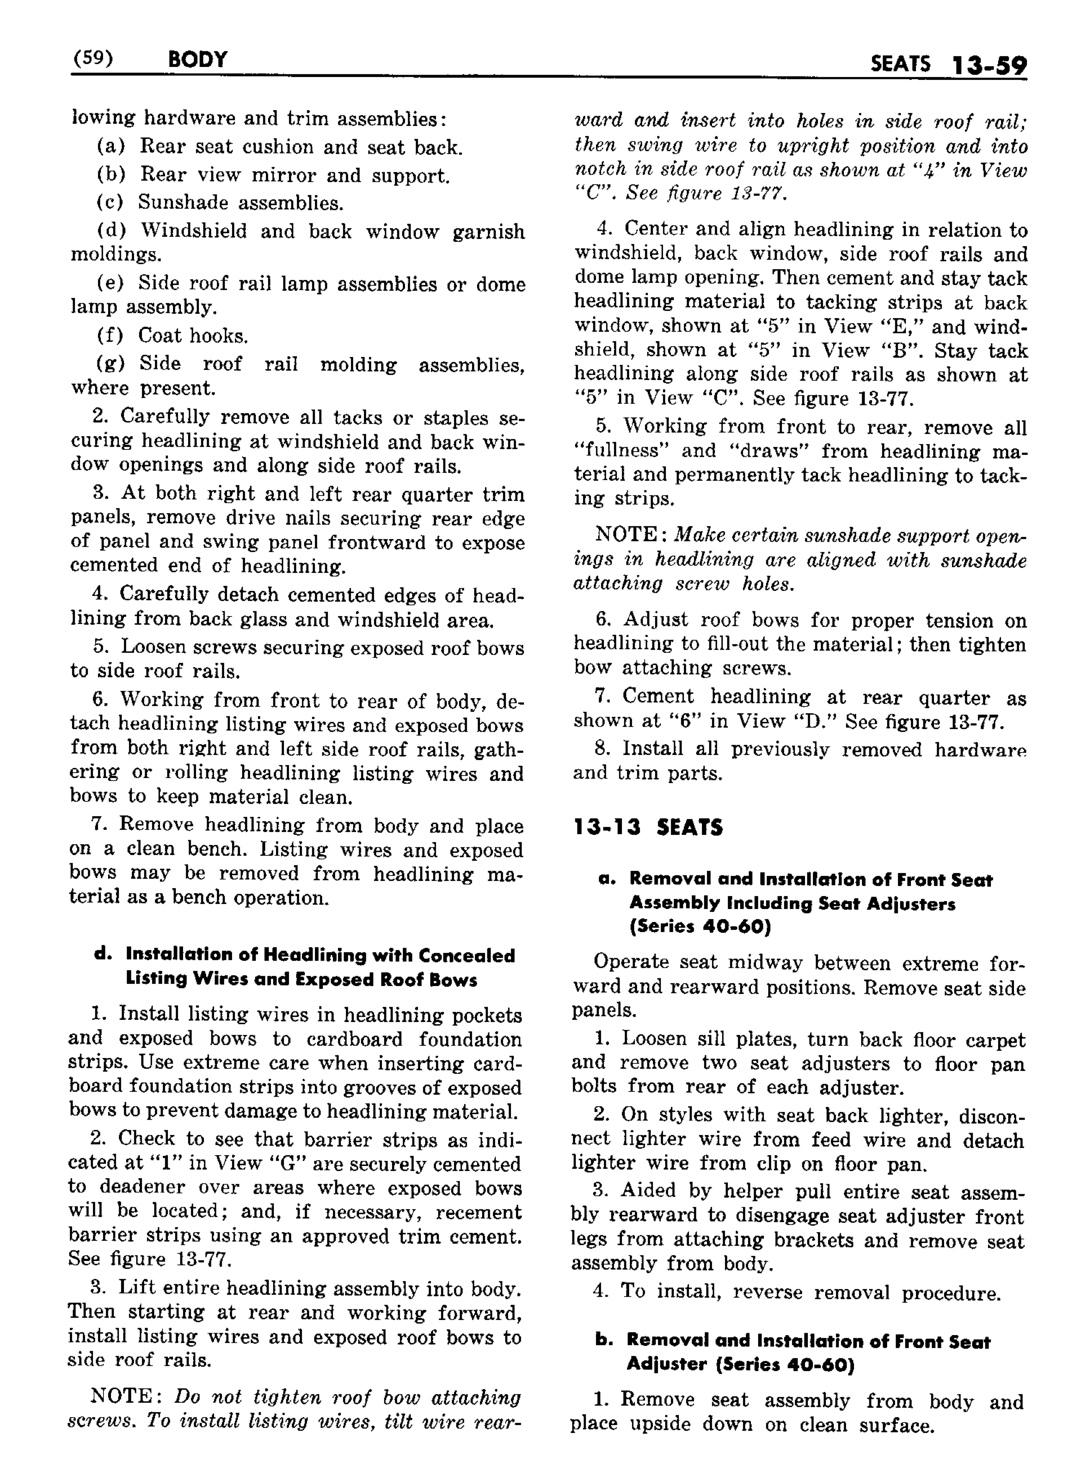 n_1958 Buick Body Service Manual-060-060.jpg